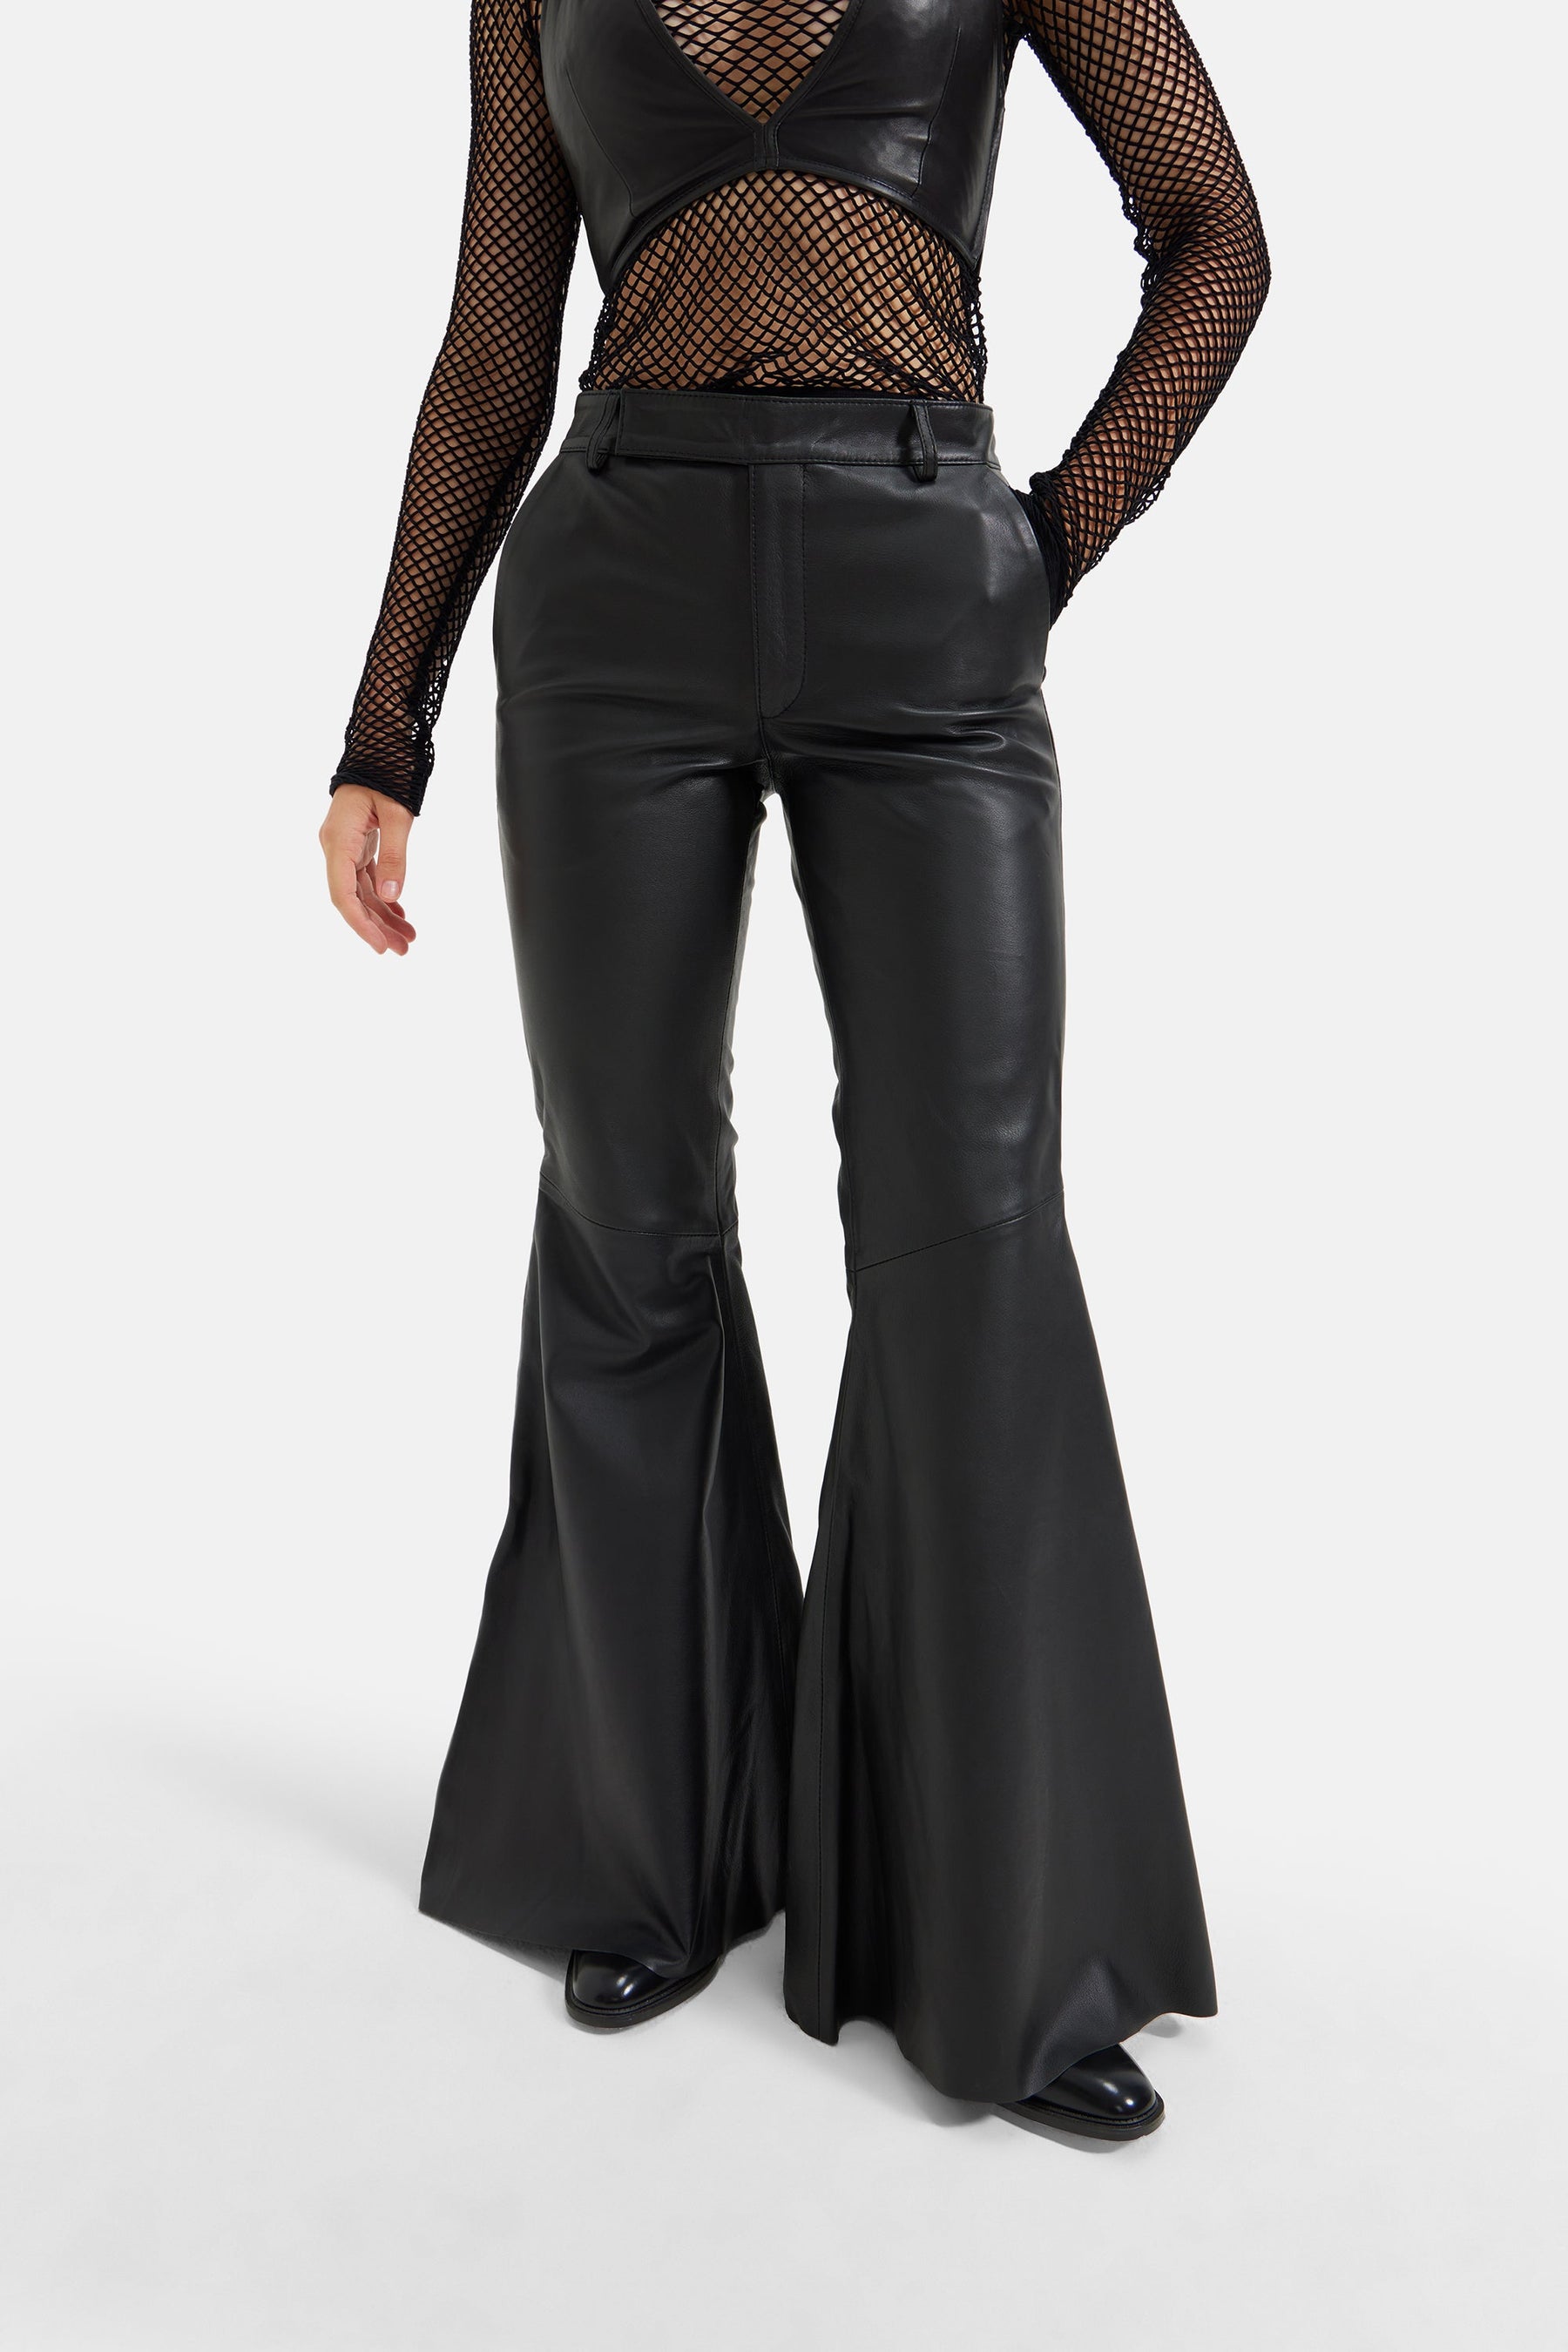 Alara - Flare Stretch Leather Pants - Black